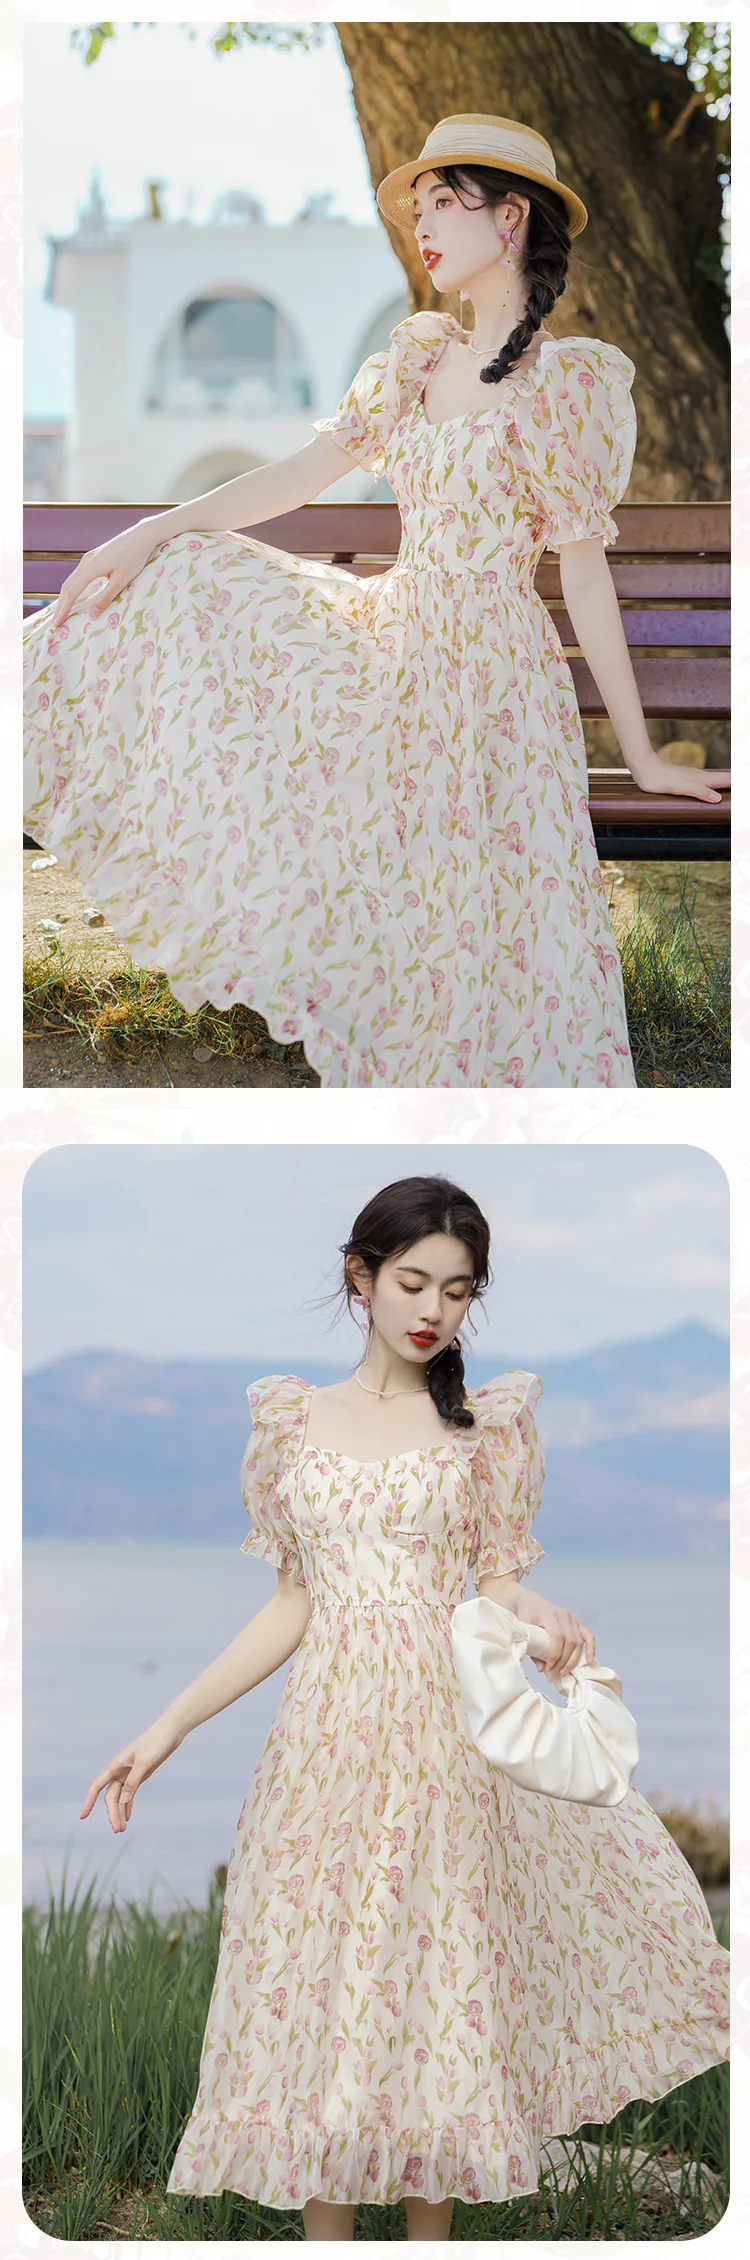 Elegant-Square-Neck-Short-Sleeve-Tulip-Floral-Printed-Casual-Dress17